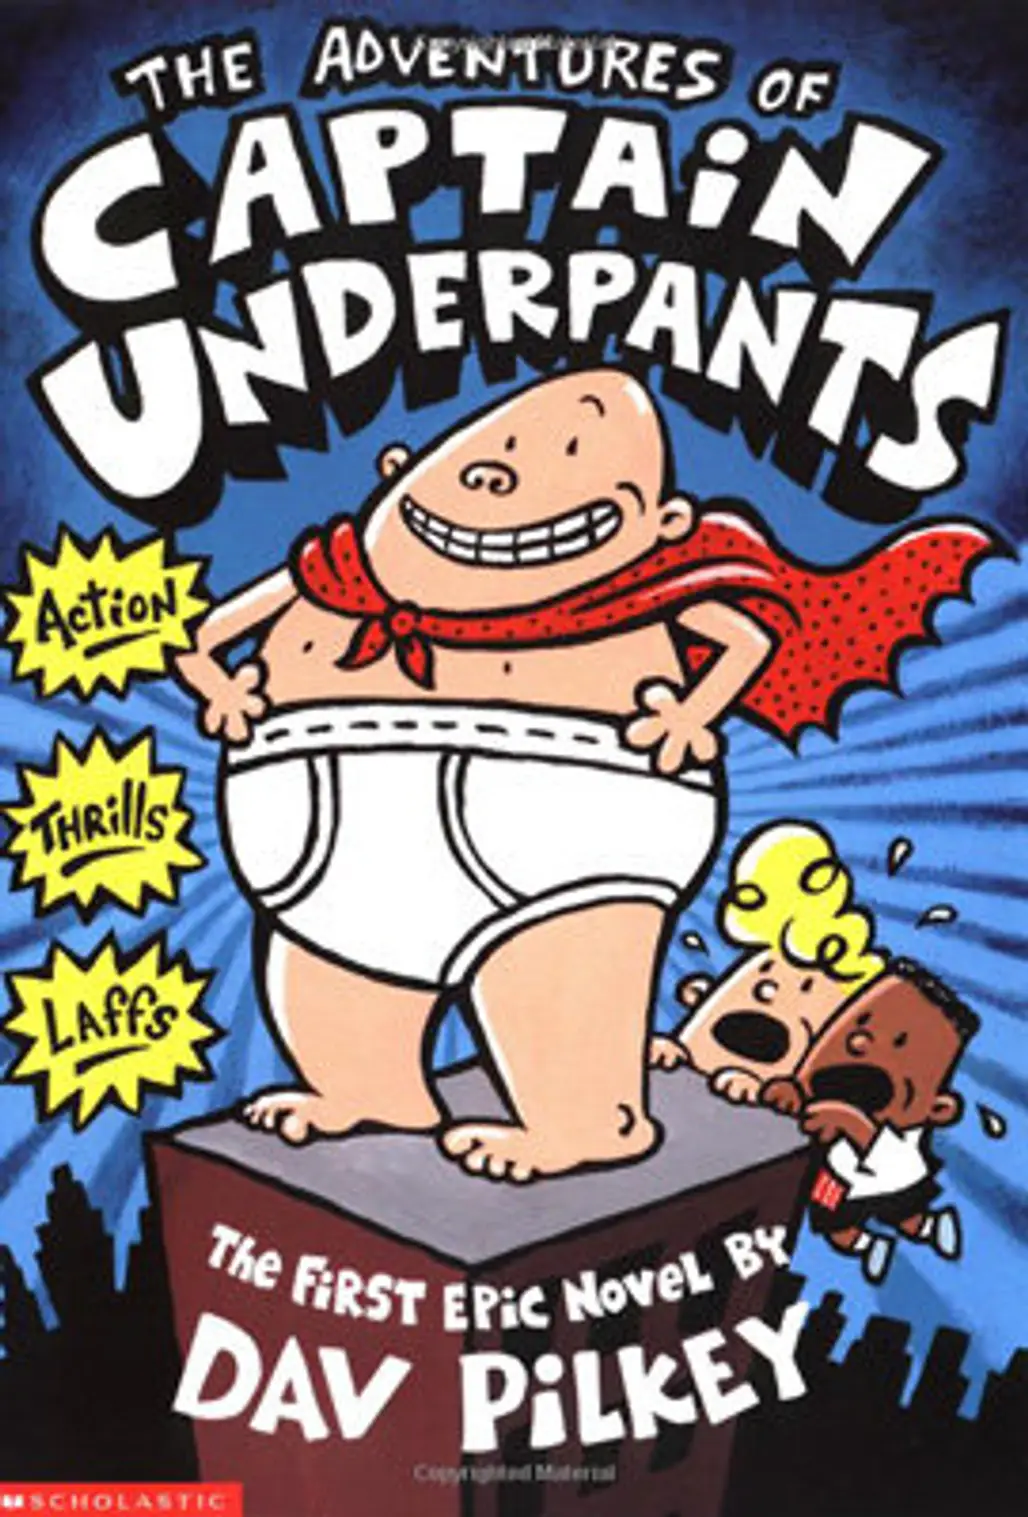 Captain Underpants Series by Dav Pilkey